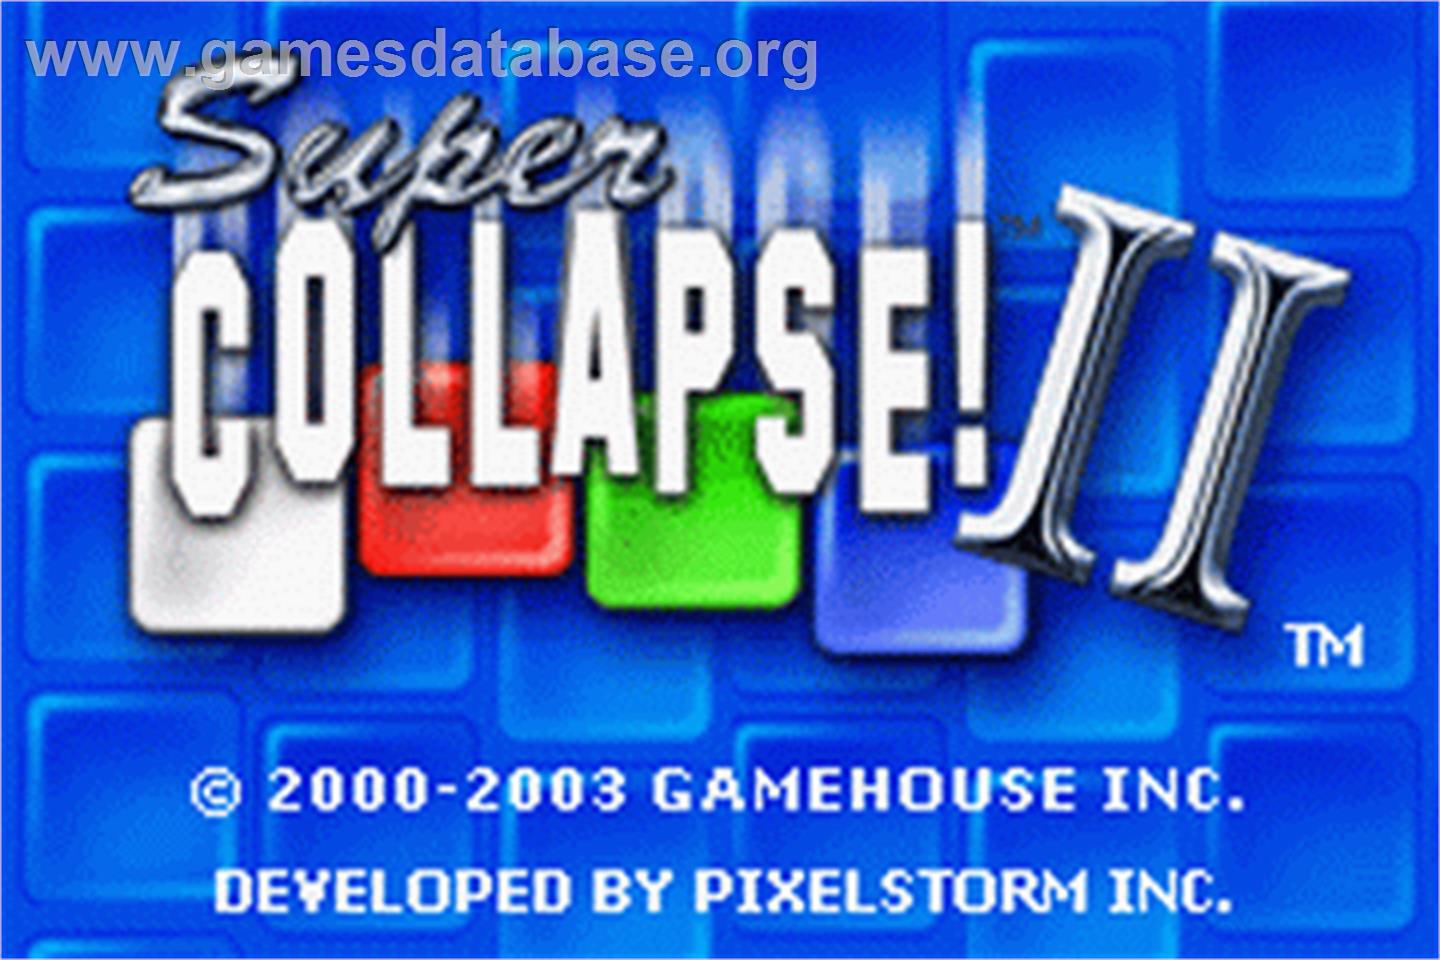 Super Collapse! 2 - Nintendo Game Boy Advance - Artwork - Title Screen